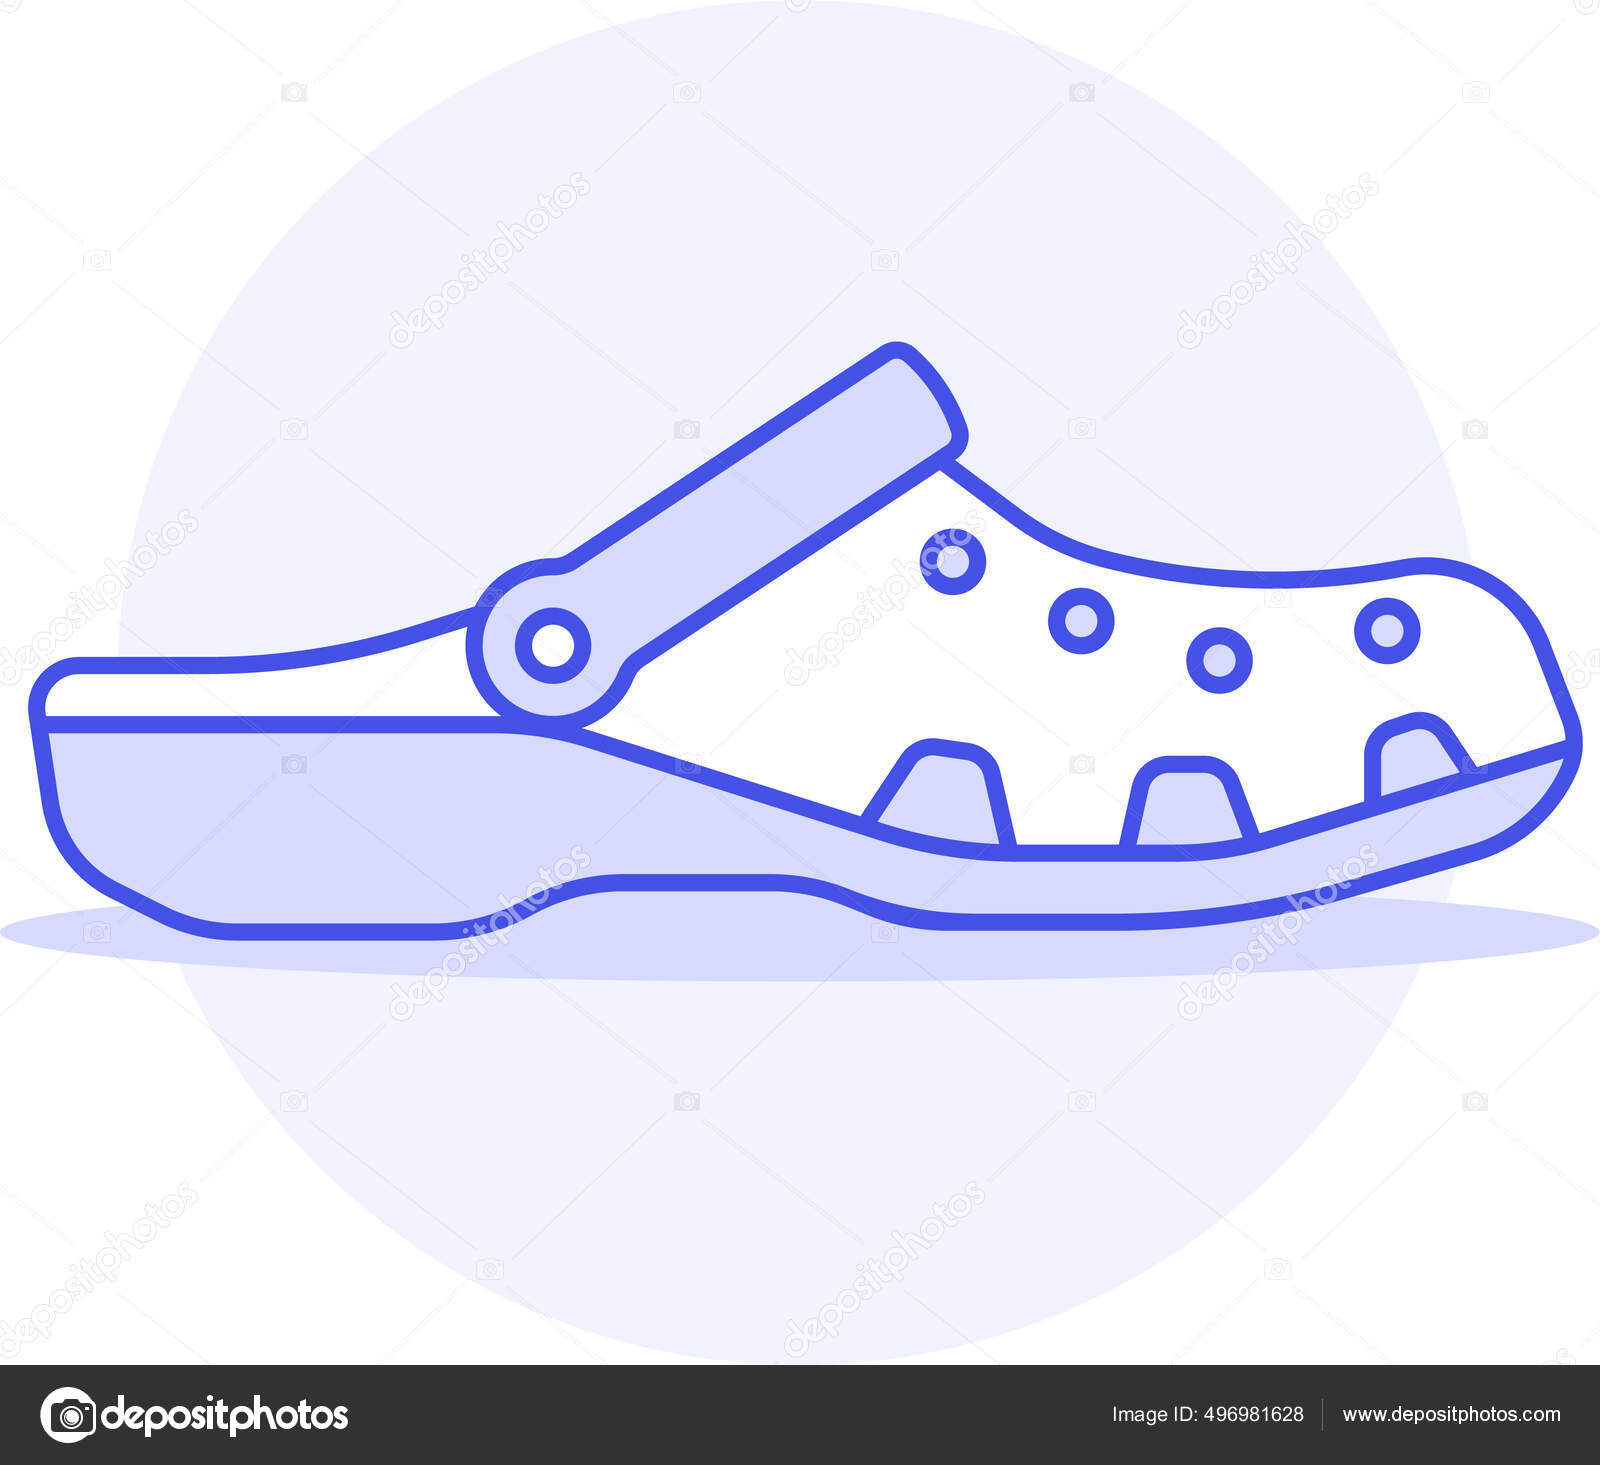 18 Crocs shoes Vector Images Depositphotos